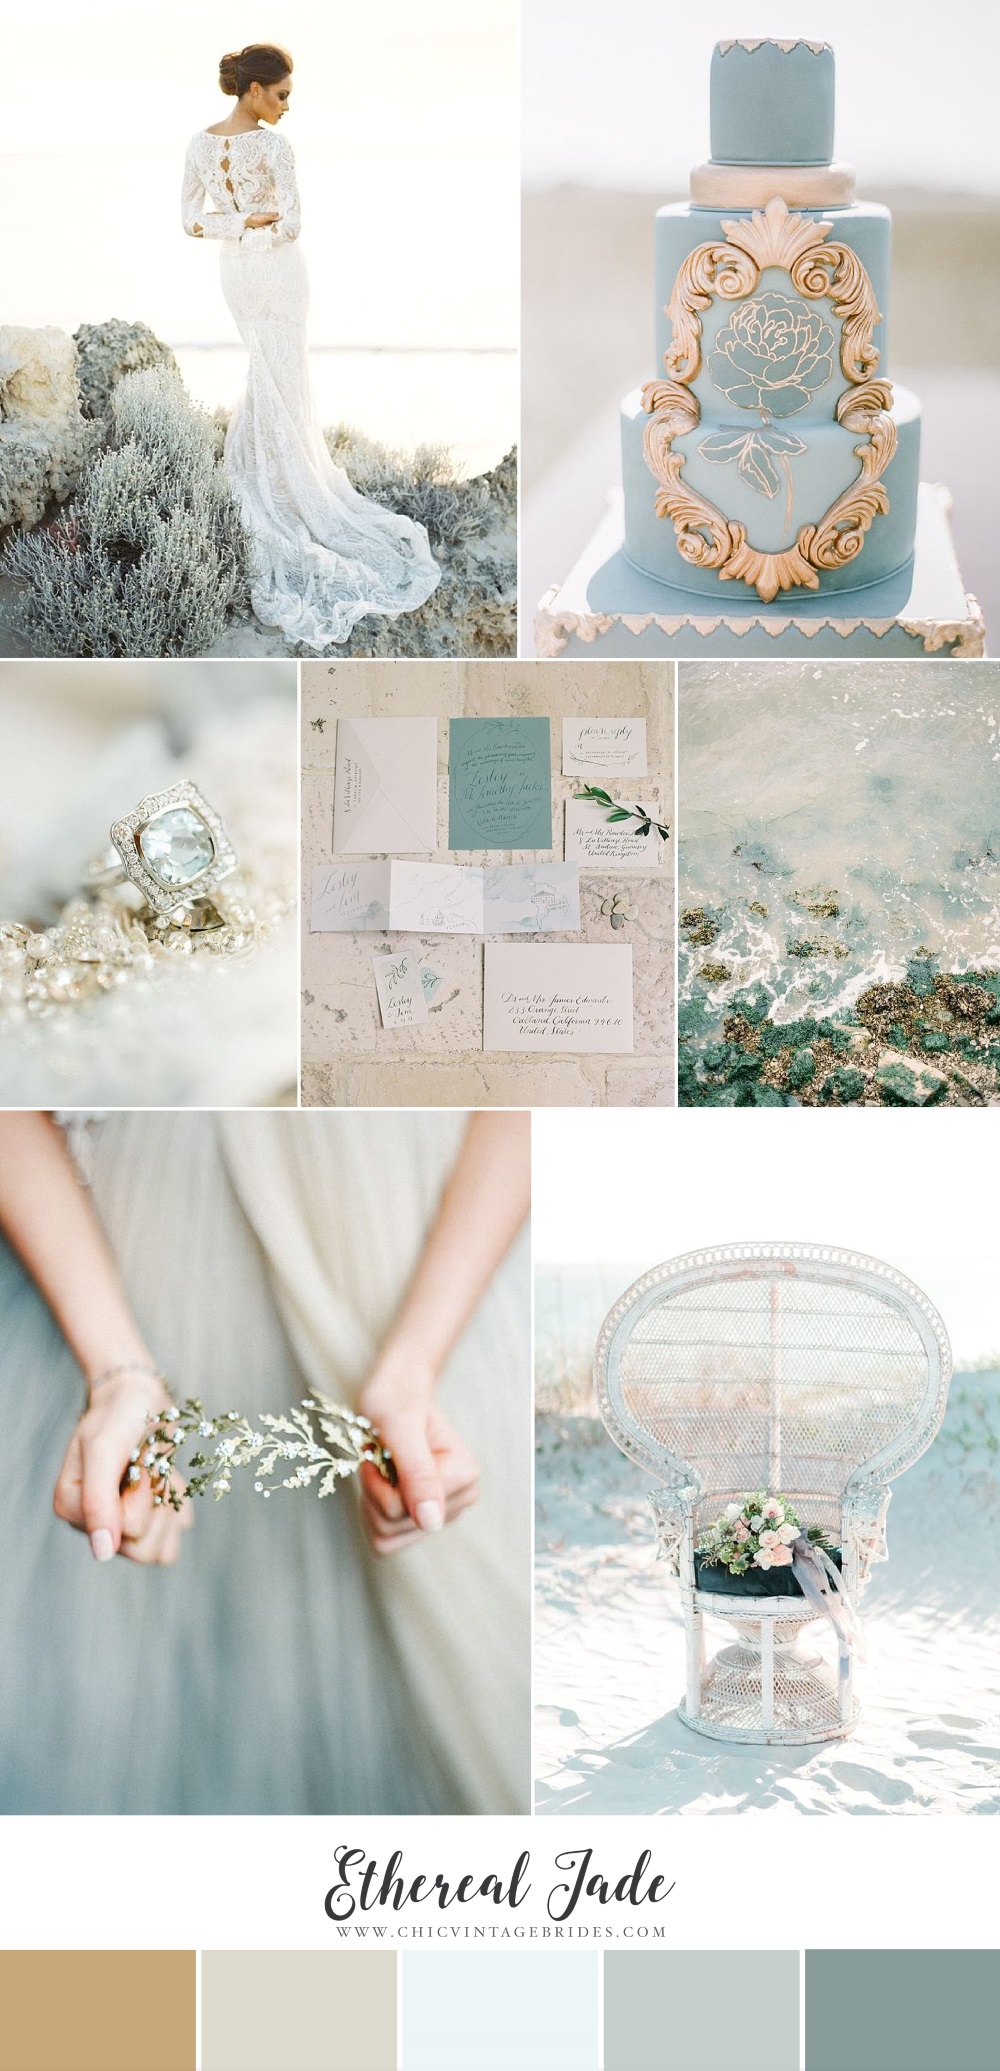 Ethereal Jade - Dreamy Beach Wedding Inspiration in Shades of Jade & Sand